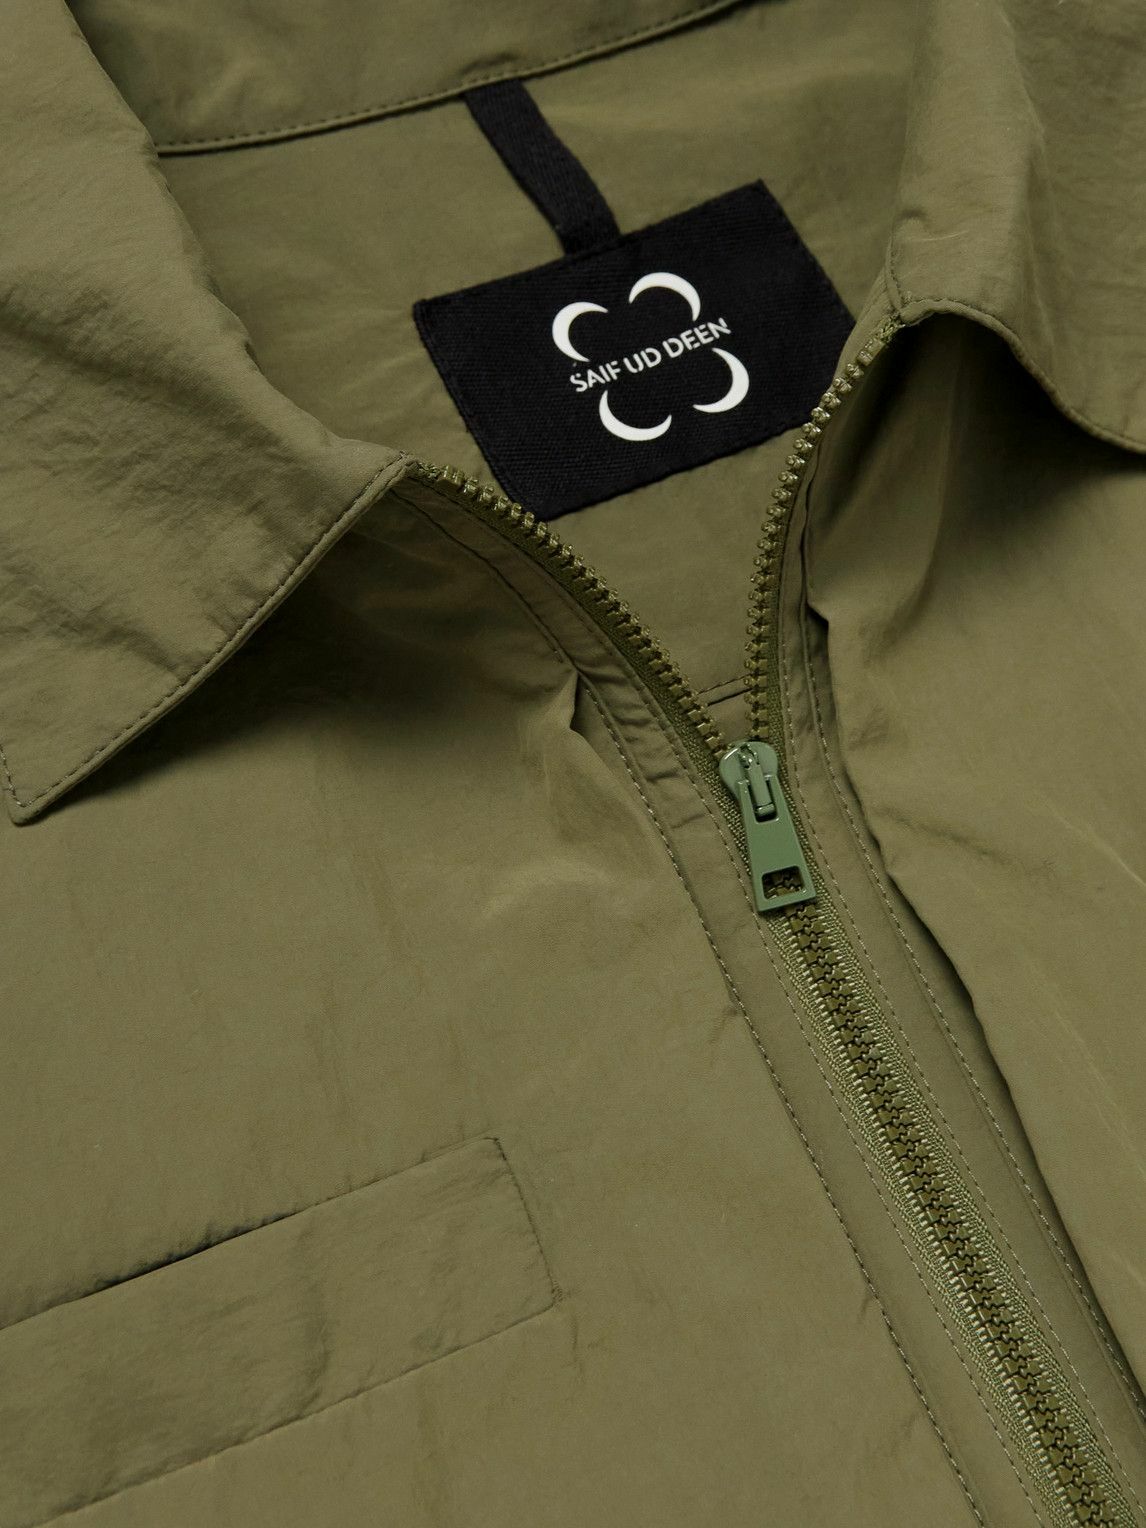 SAIF UD DEEN - Convertible Panelled Canvas Jacket - Green